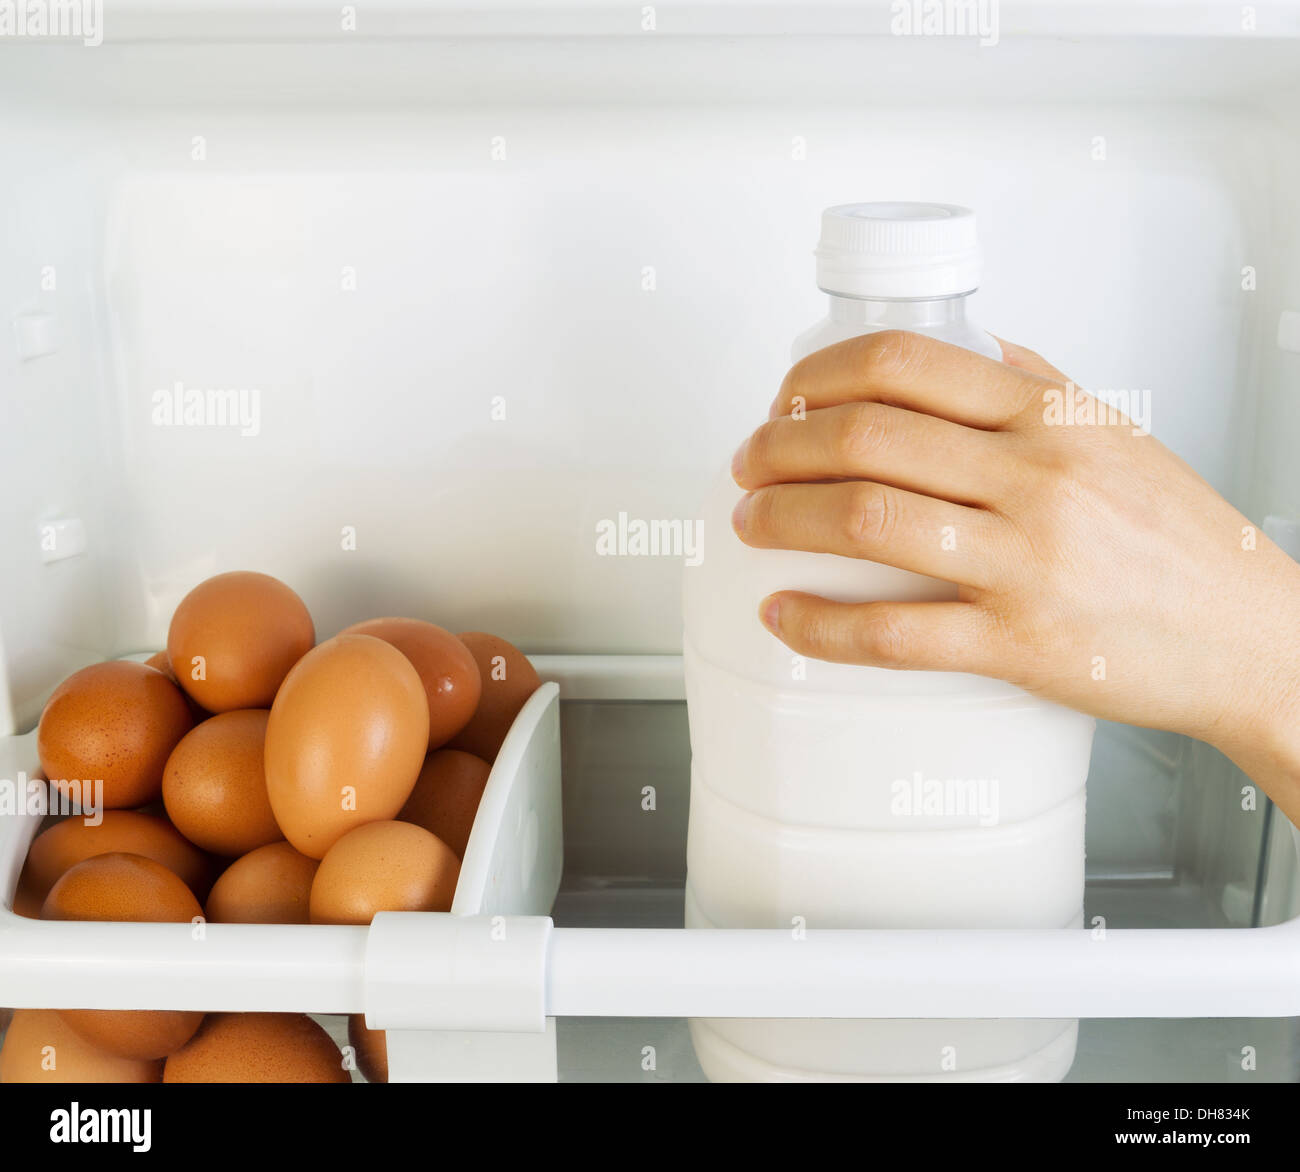 https://c8.alamy.com/comp/DH834K/photo-of-female-hand-grabbing-milk-container-off-of-refrigerator-door-DH834K.jpg